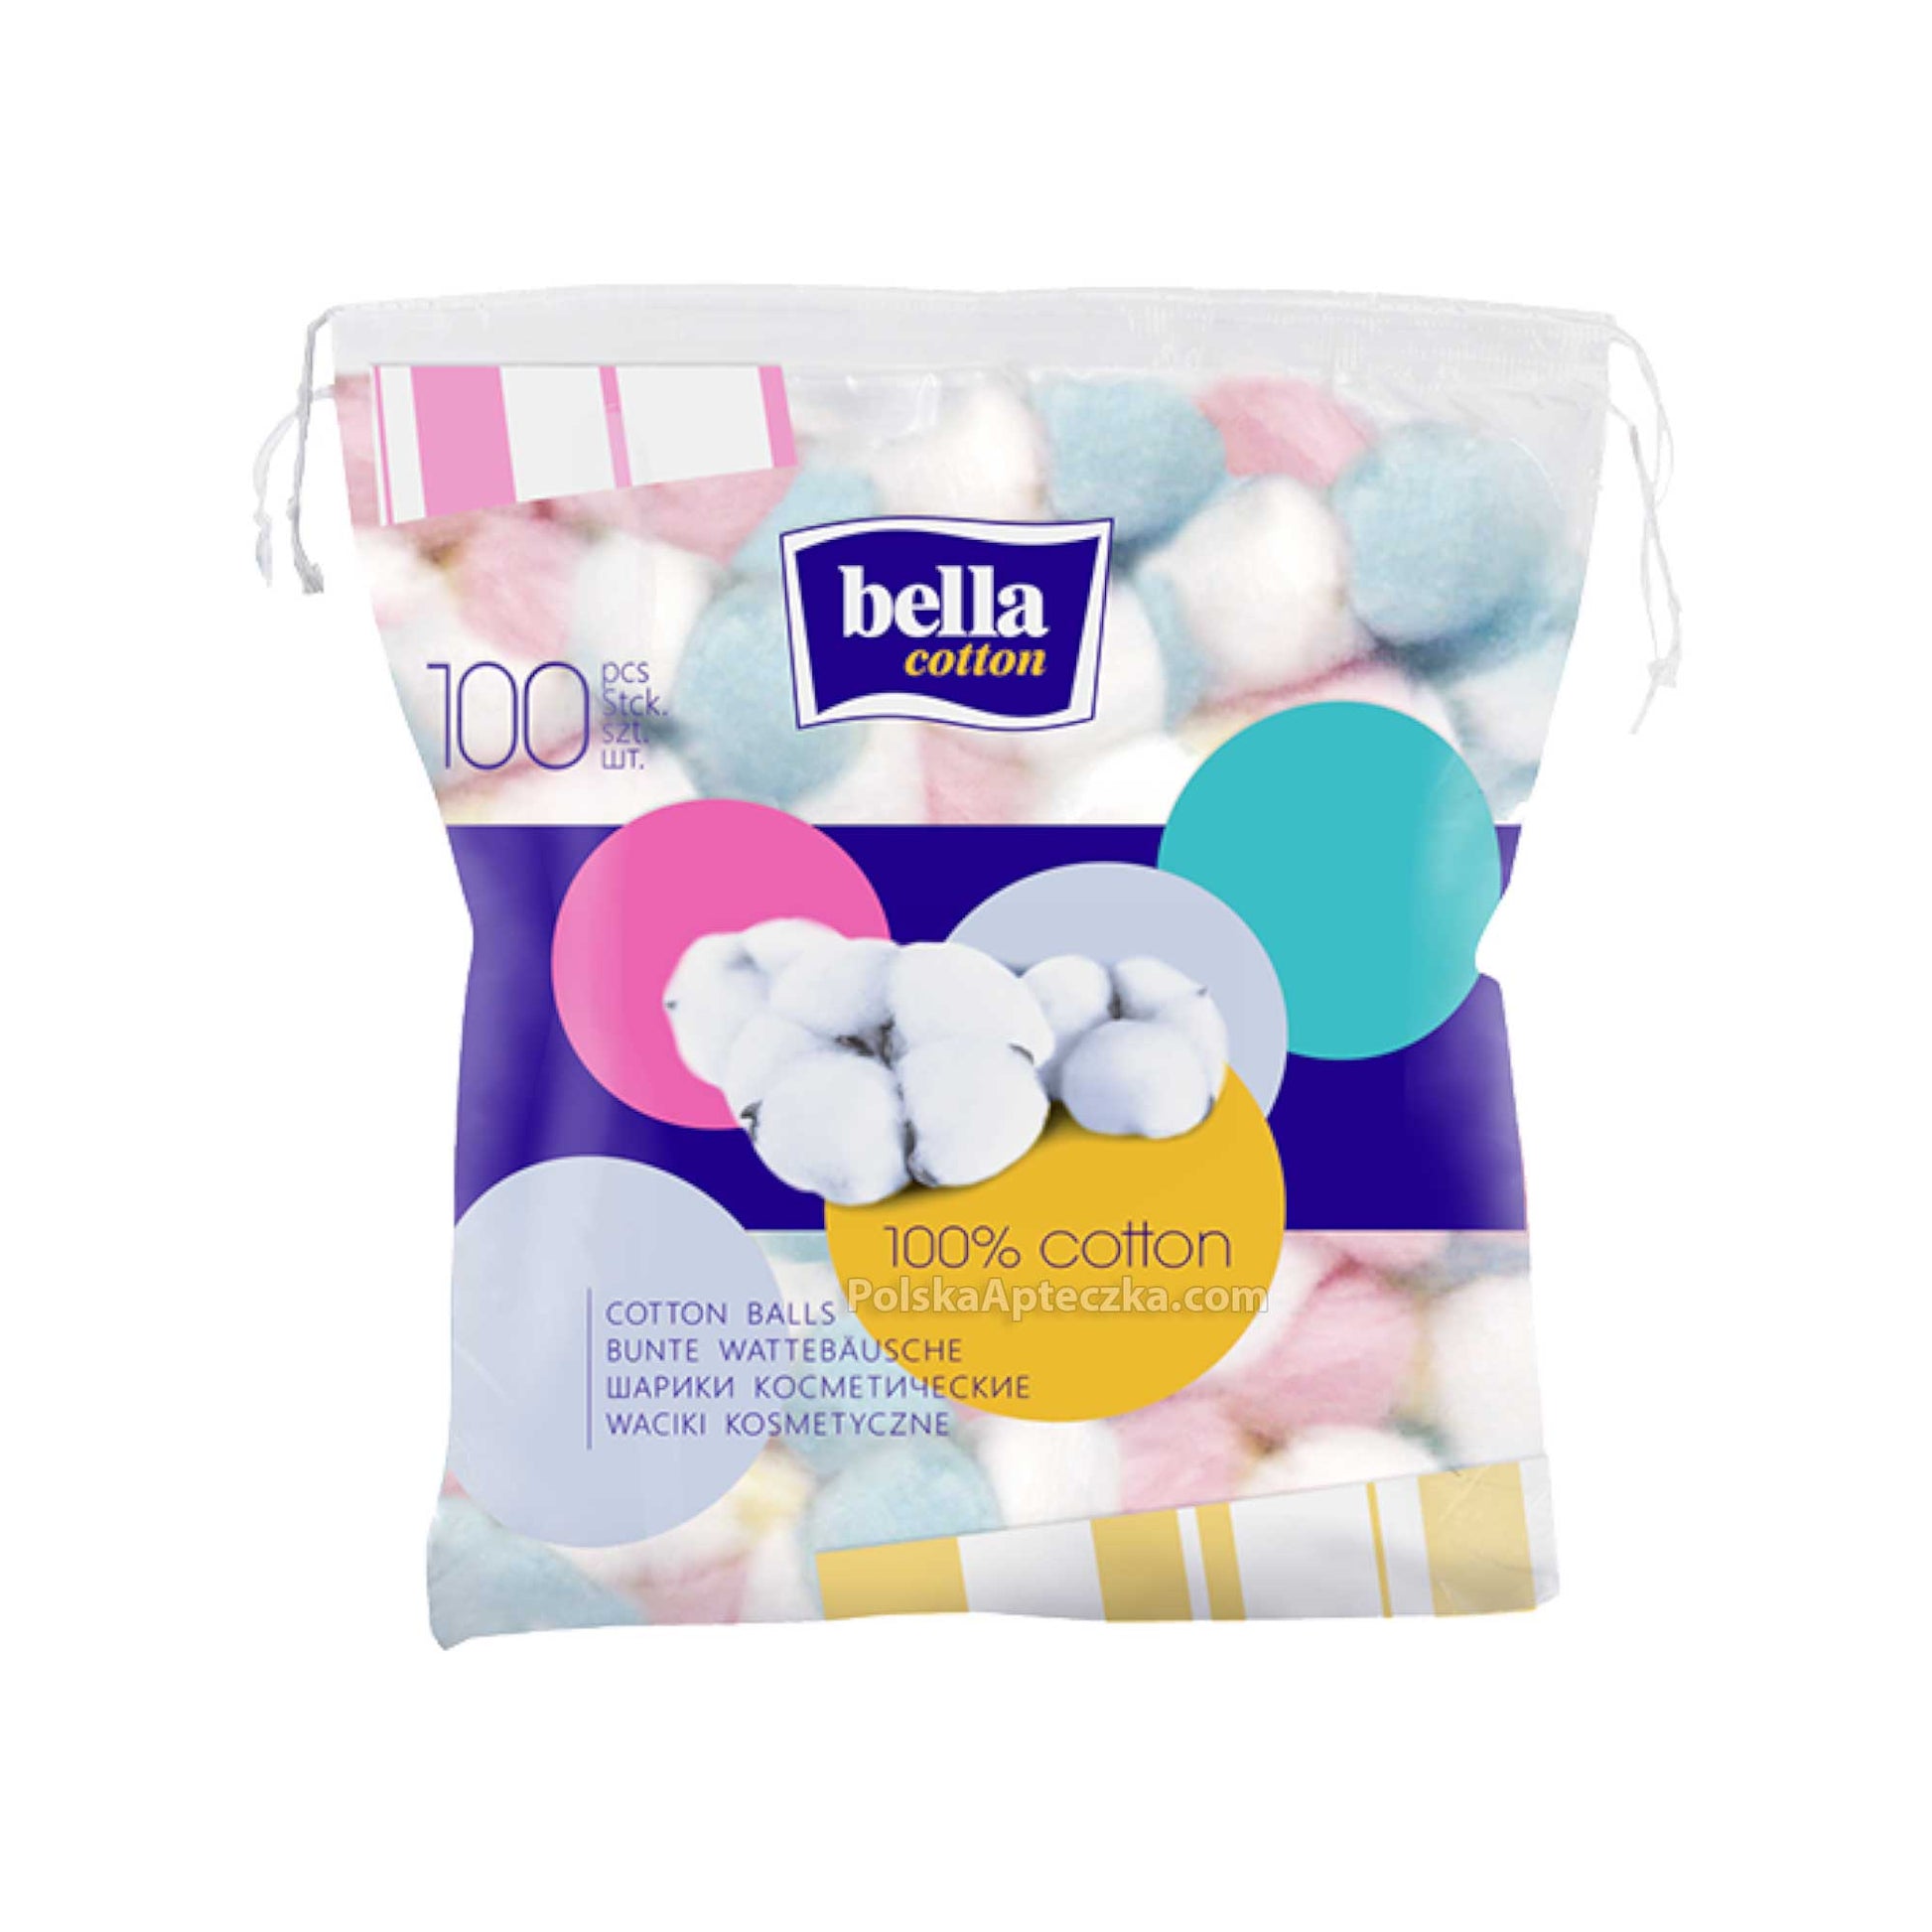 Bella Cotton Balls 100 sztuk, Bella wata